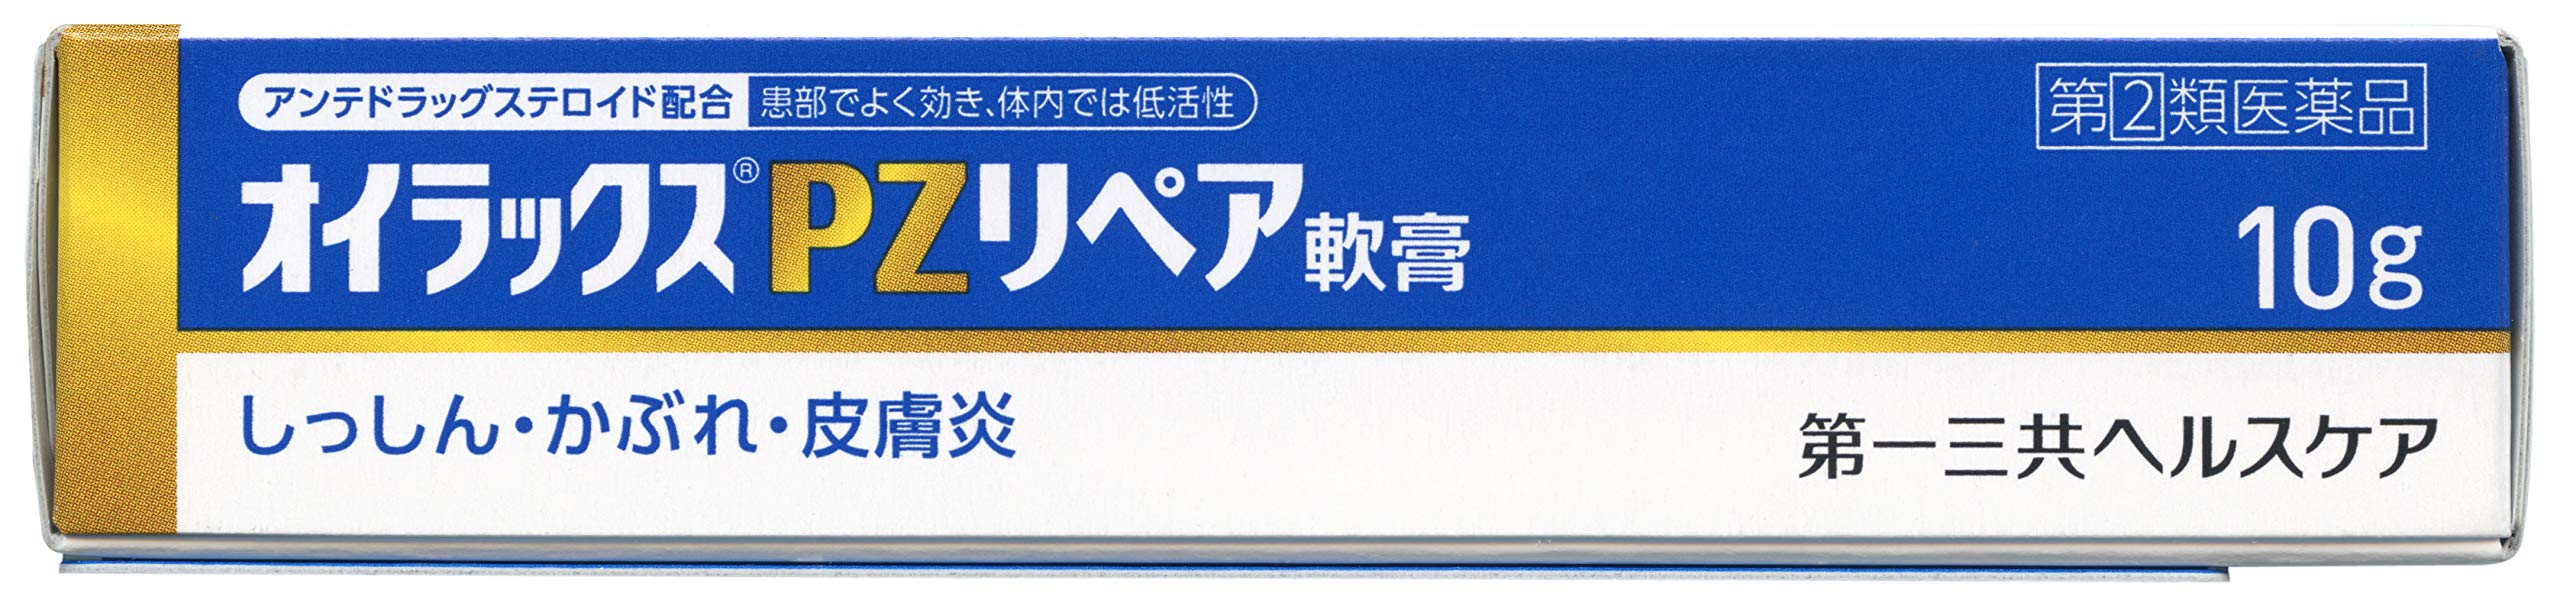 Oilax Pz Repair Ointment 10G Self-Medication Tax System - Japan Designated 2 Drugs